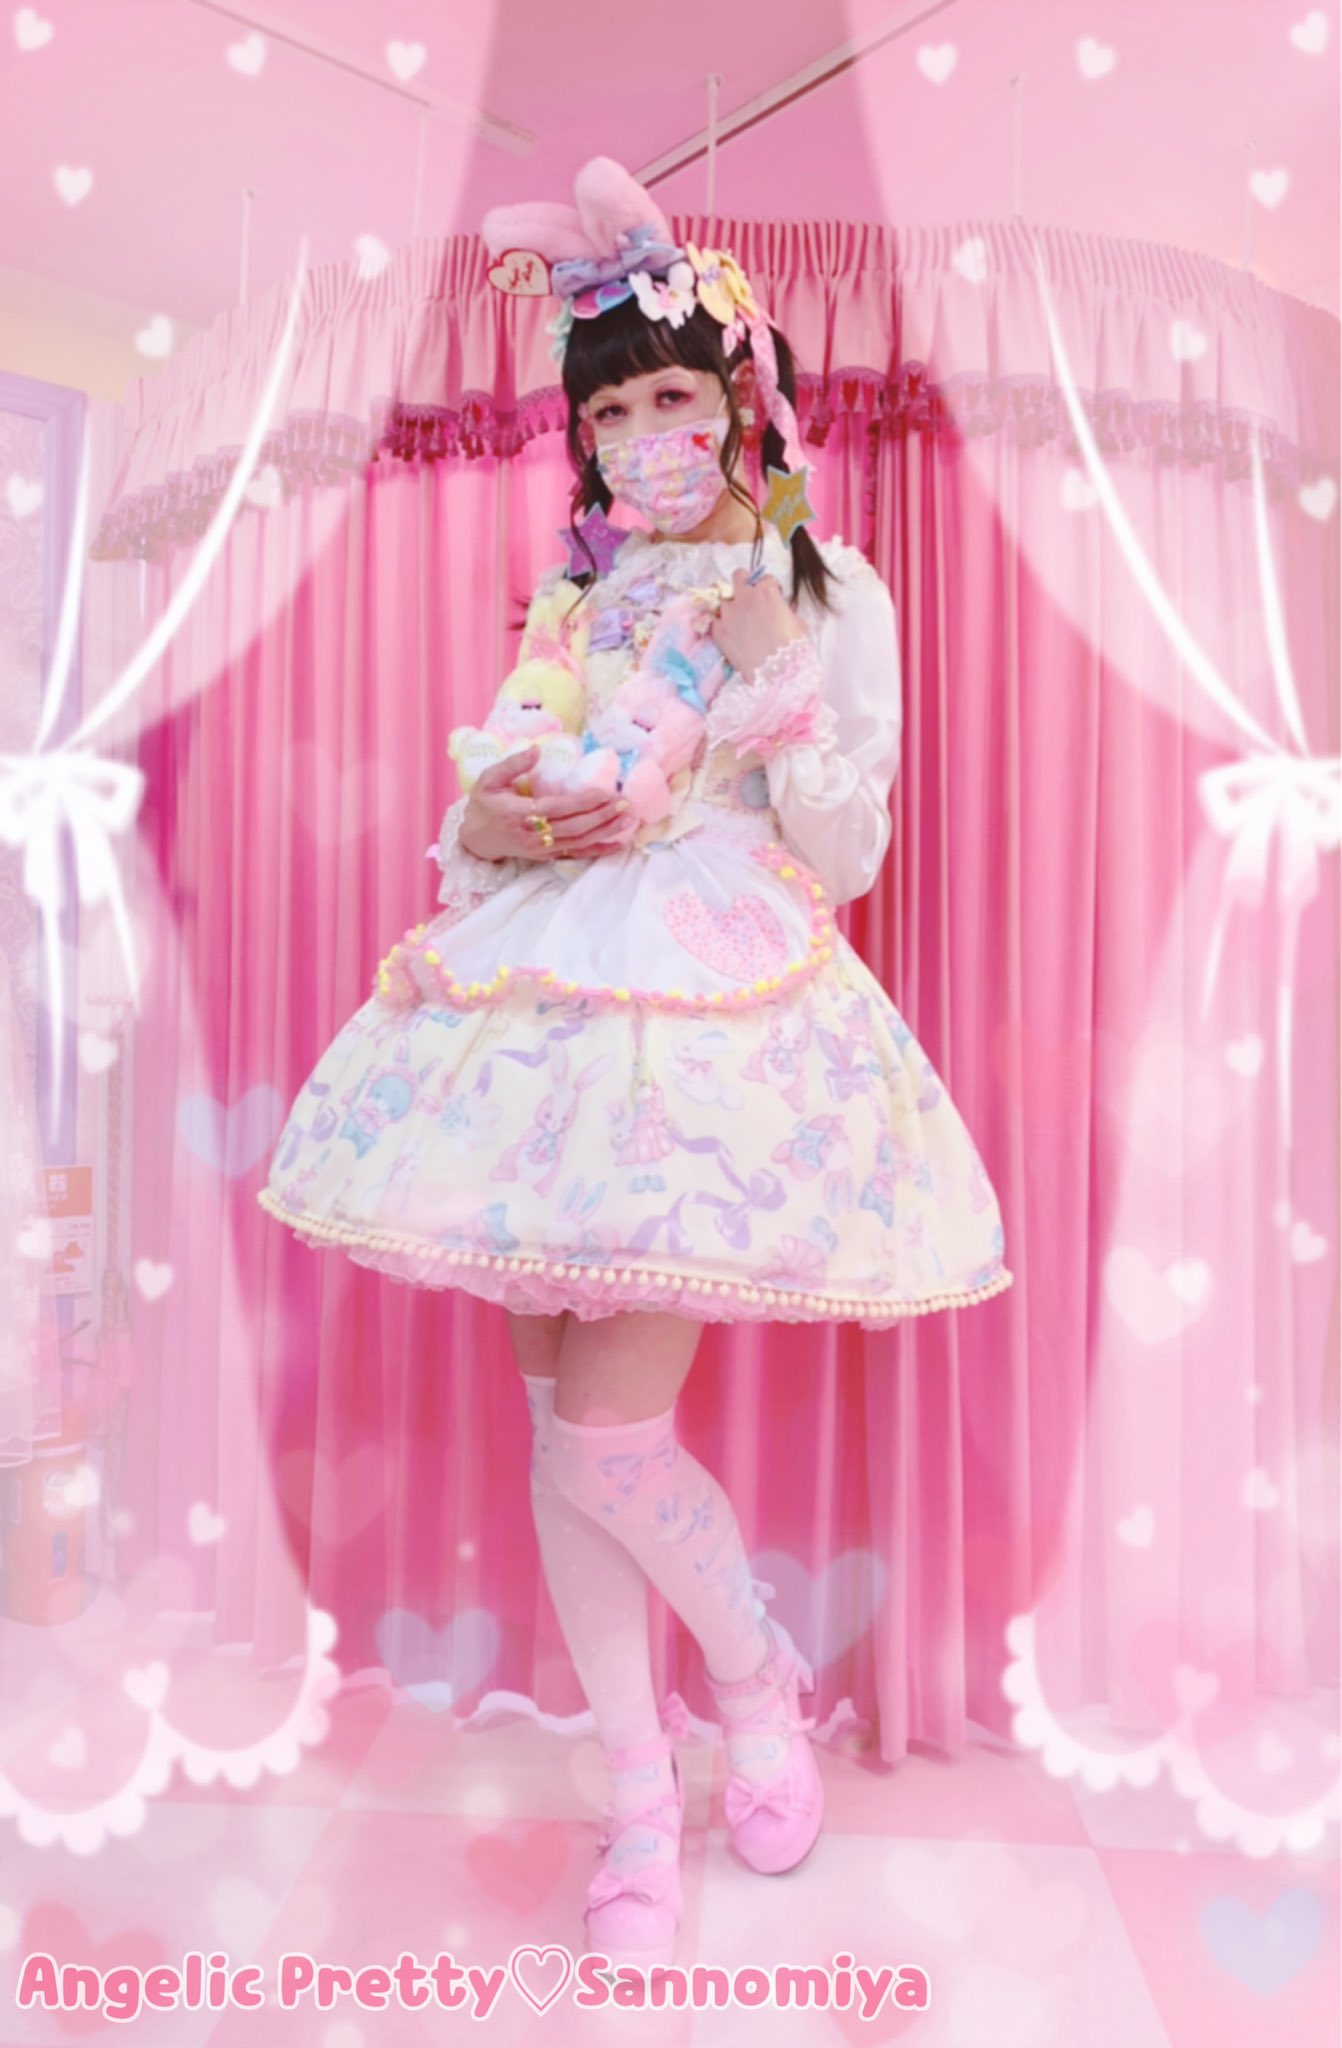 Angelic Pretty三宮店 på Twitter: 